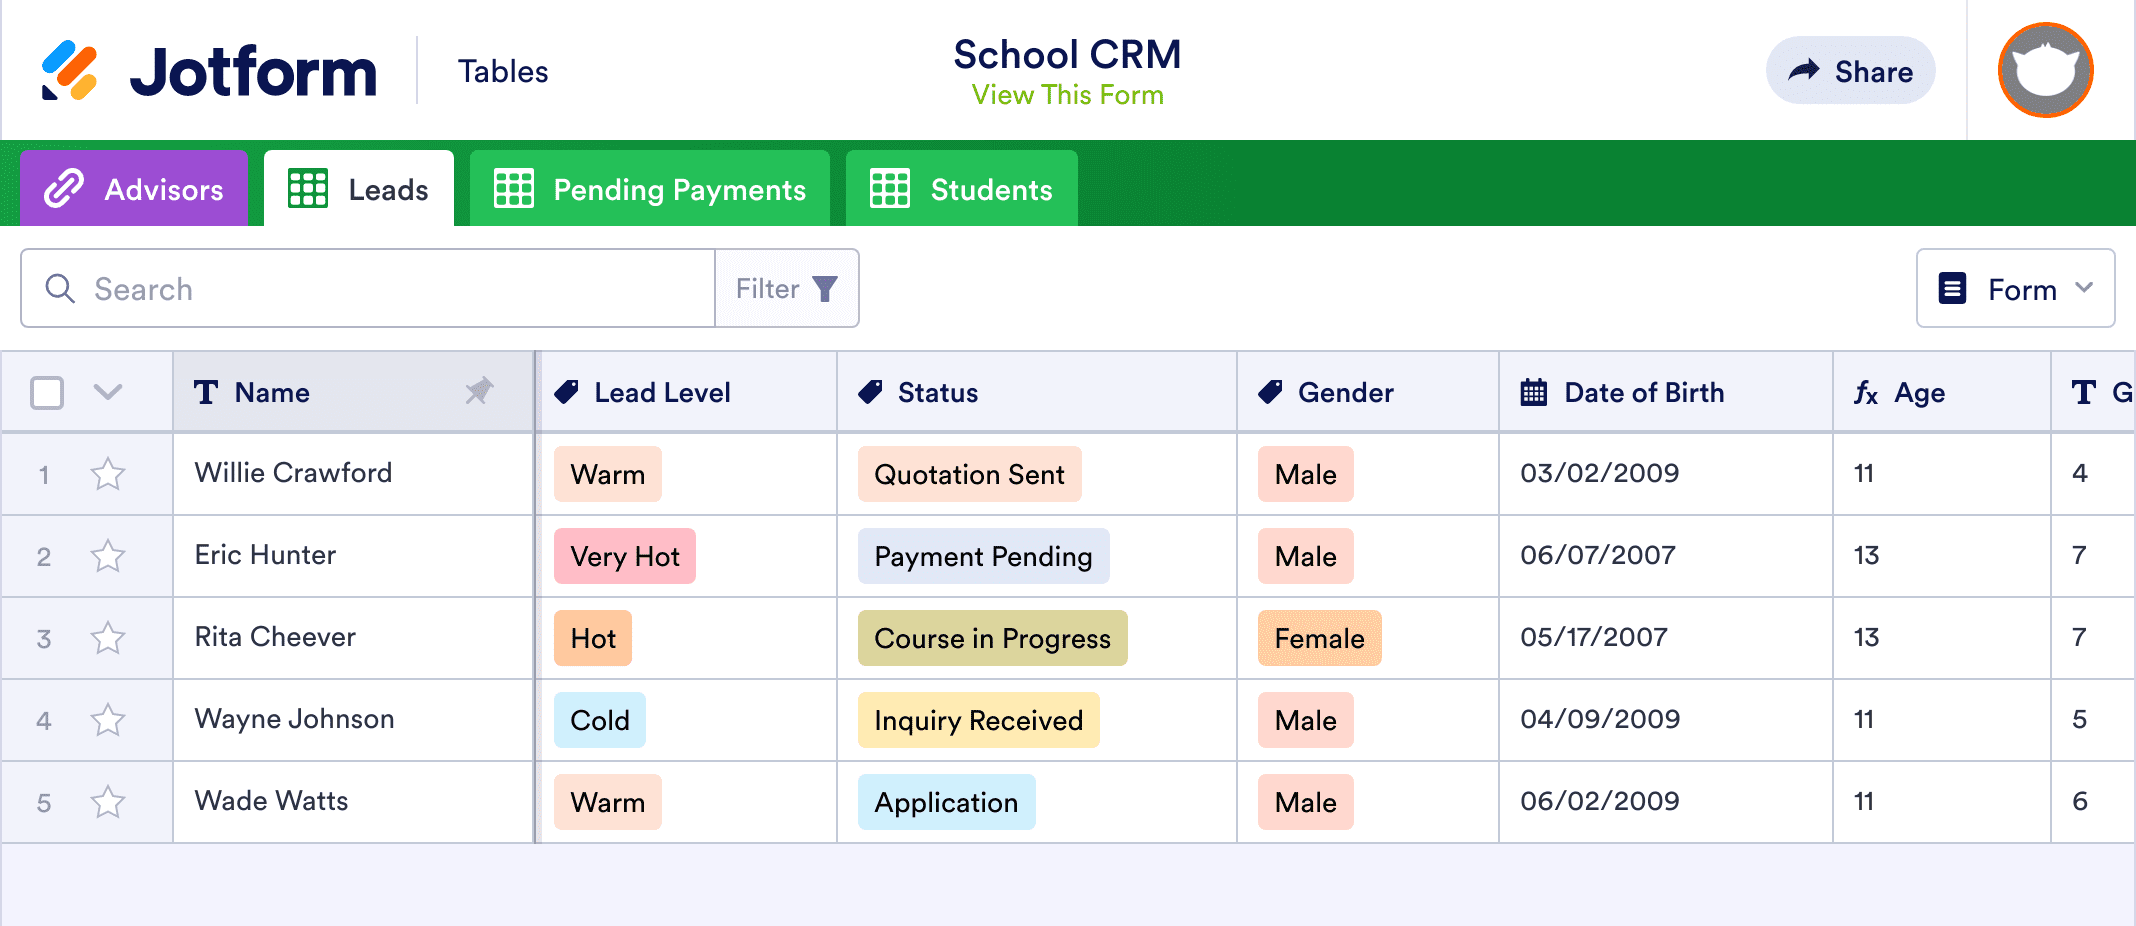 School CRM Template | Jotform Tables